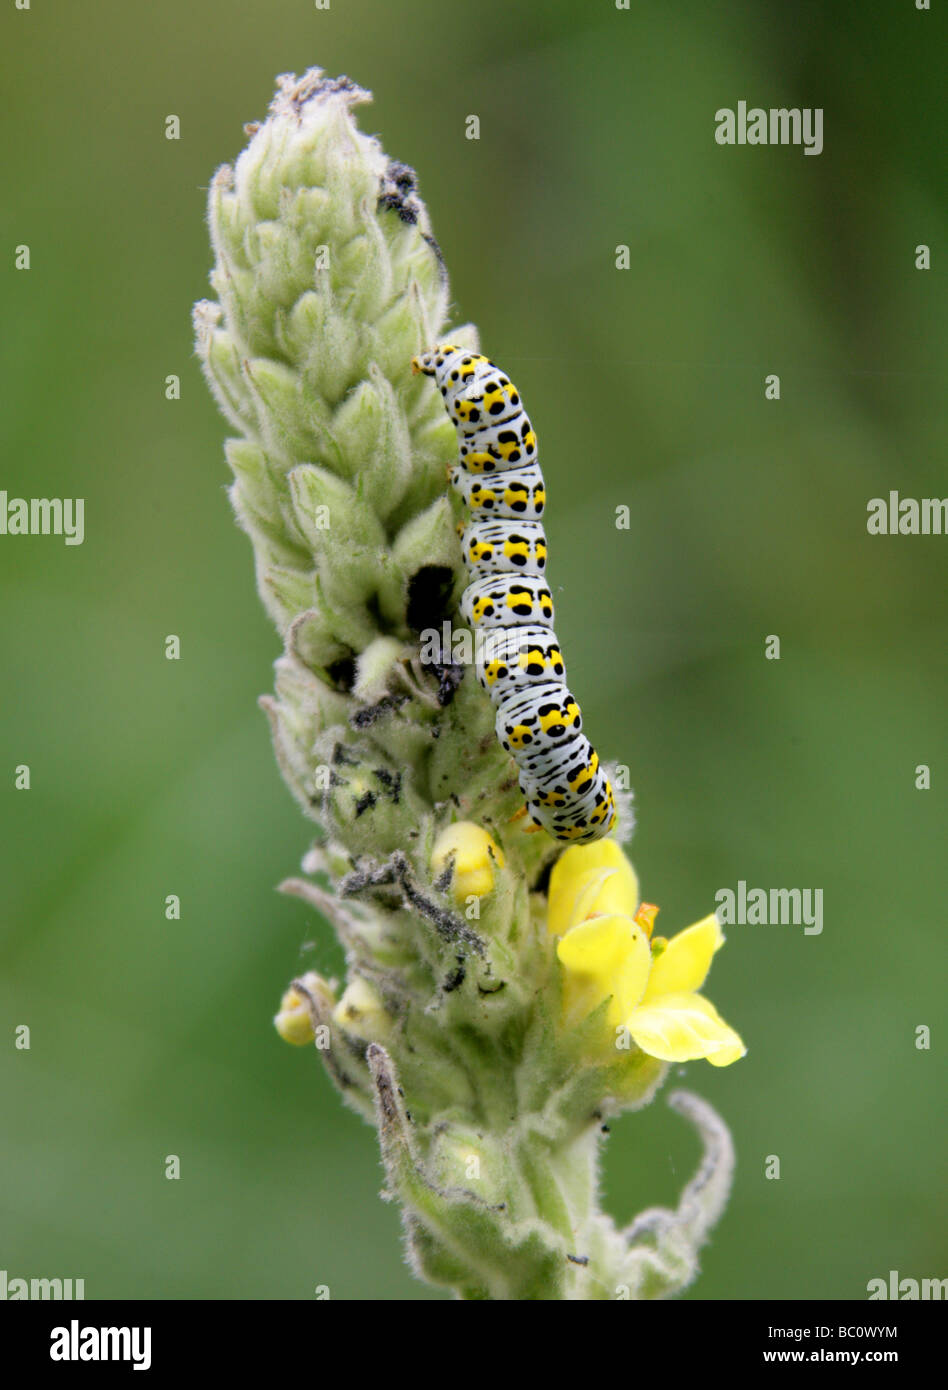 Mullein Moth Larva Feeding on Great Mullein Plant, Cucullia verbasci, Cuculliinae Noctuidae, Noctuoidea, Lepidoptera Stock Photo